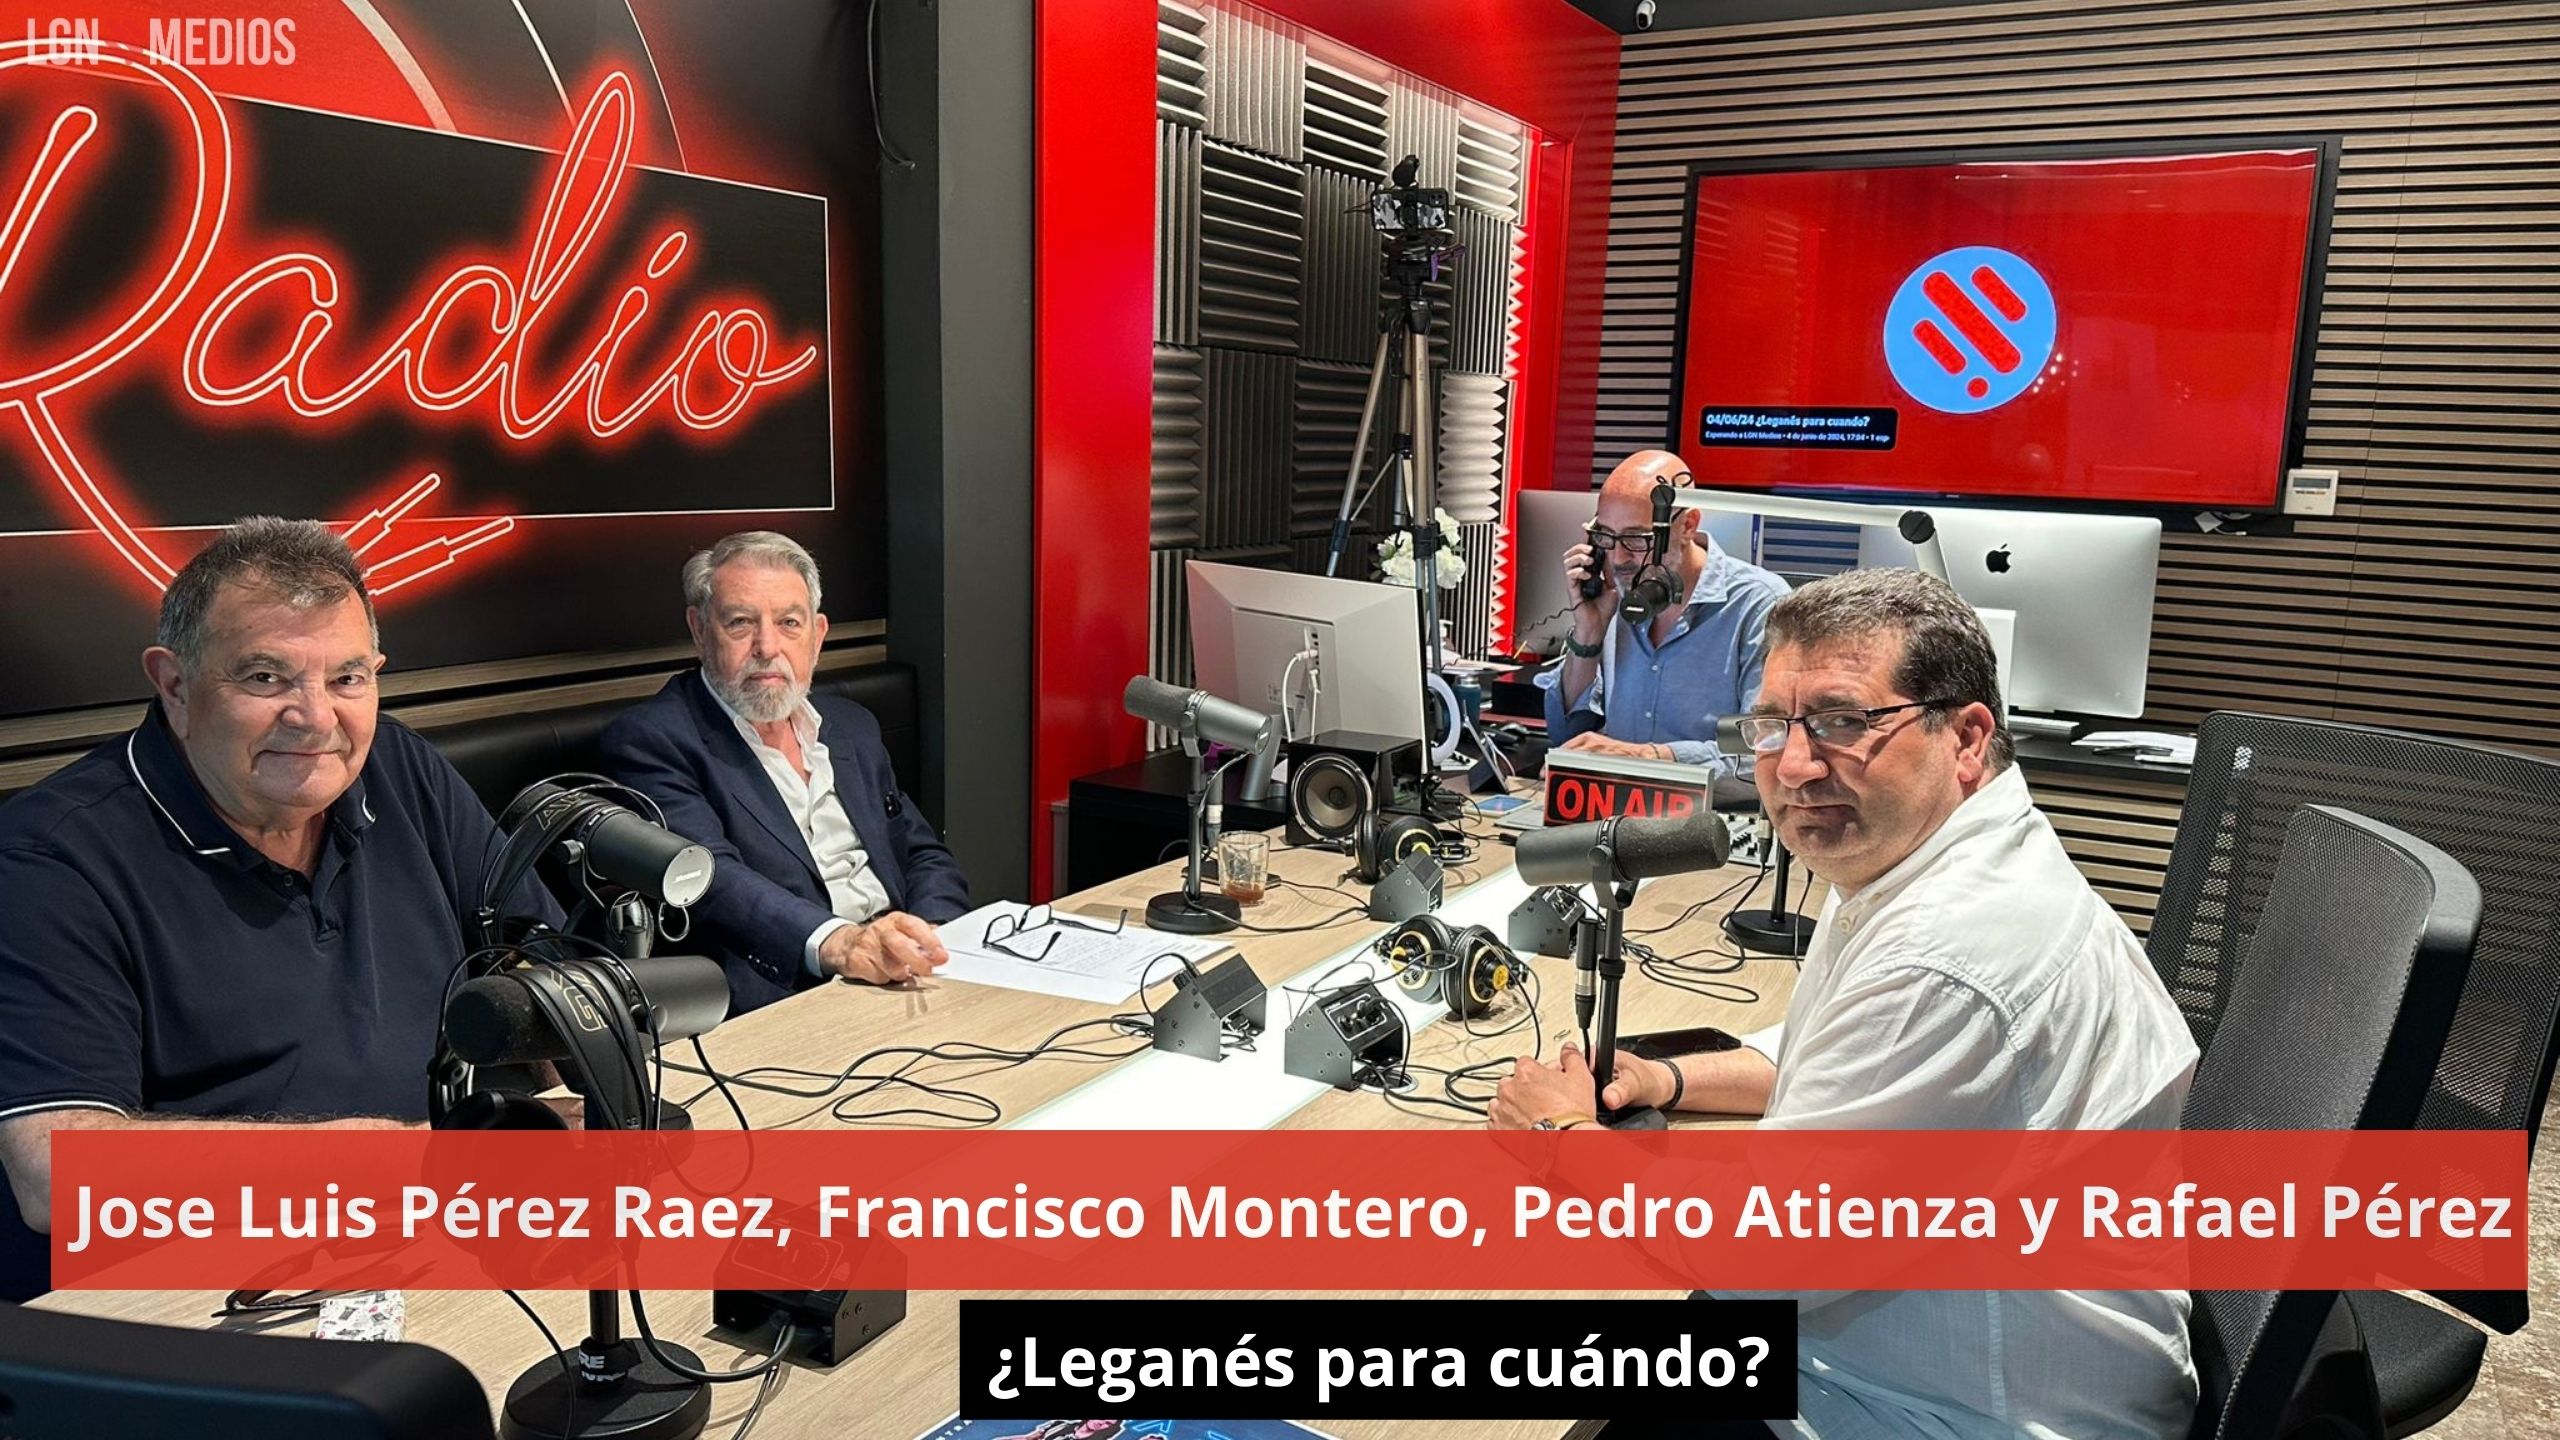 Jose Luis Pérez Raez, Francisco Montero, Pedro Atienza y Rafael Pérez ¿Leganés para cuándo?